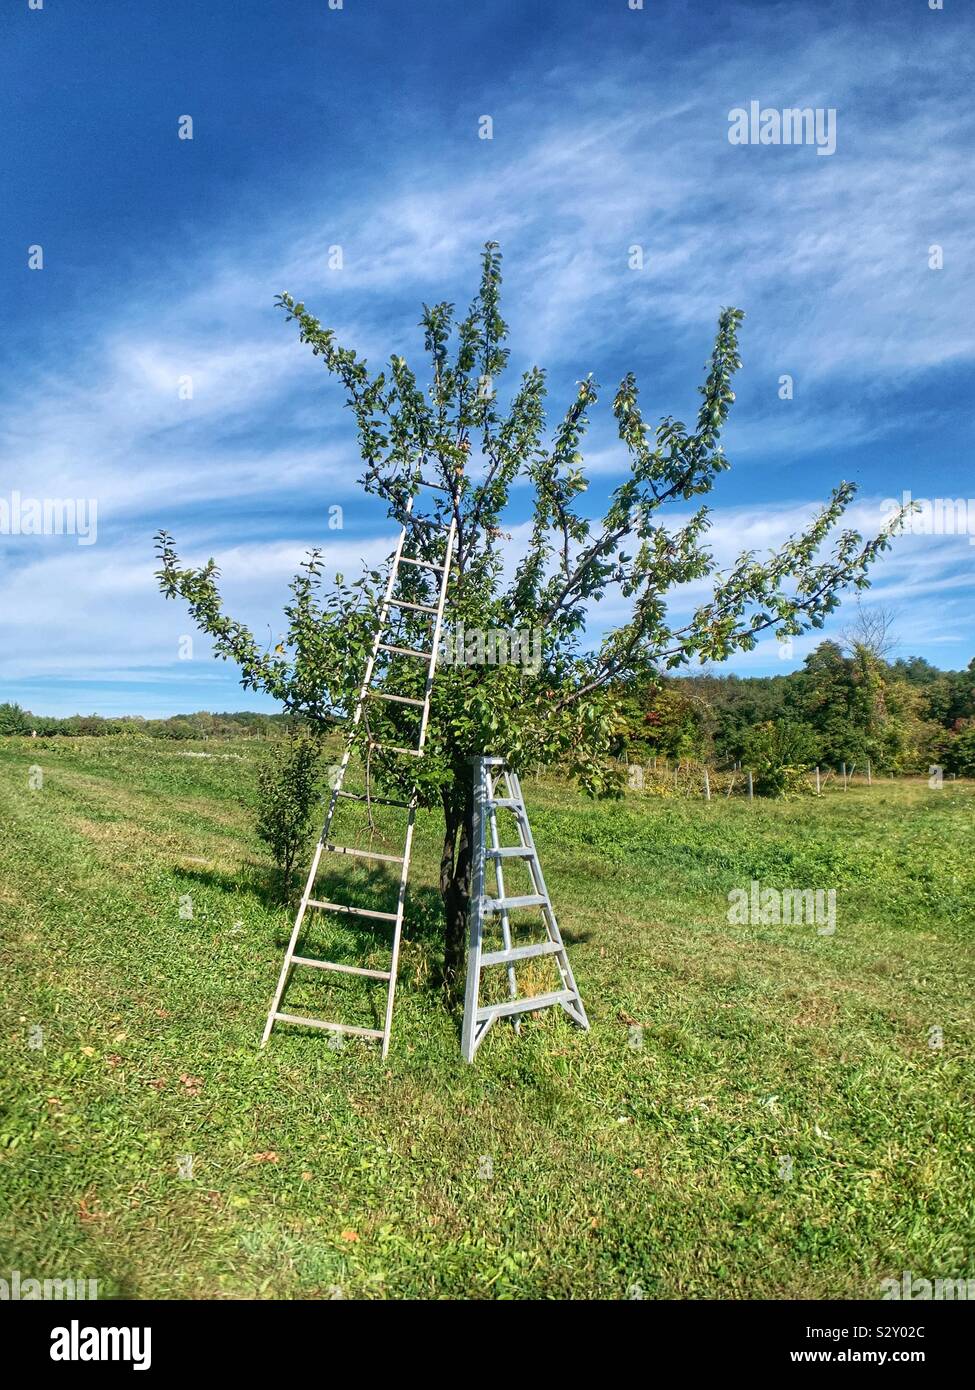 Apple picking ladders on apple tree Stock Photo